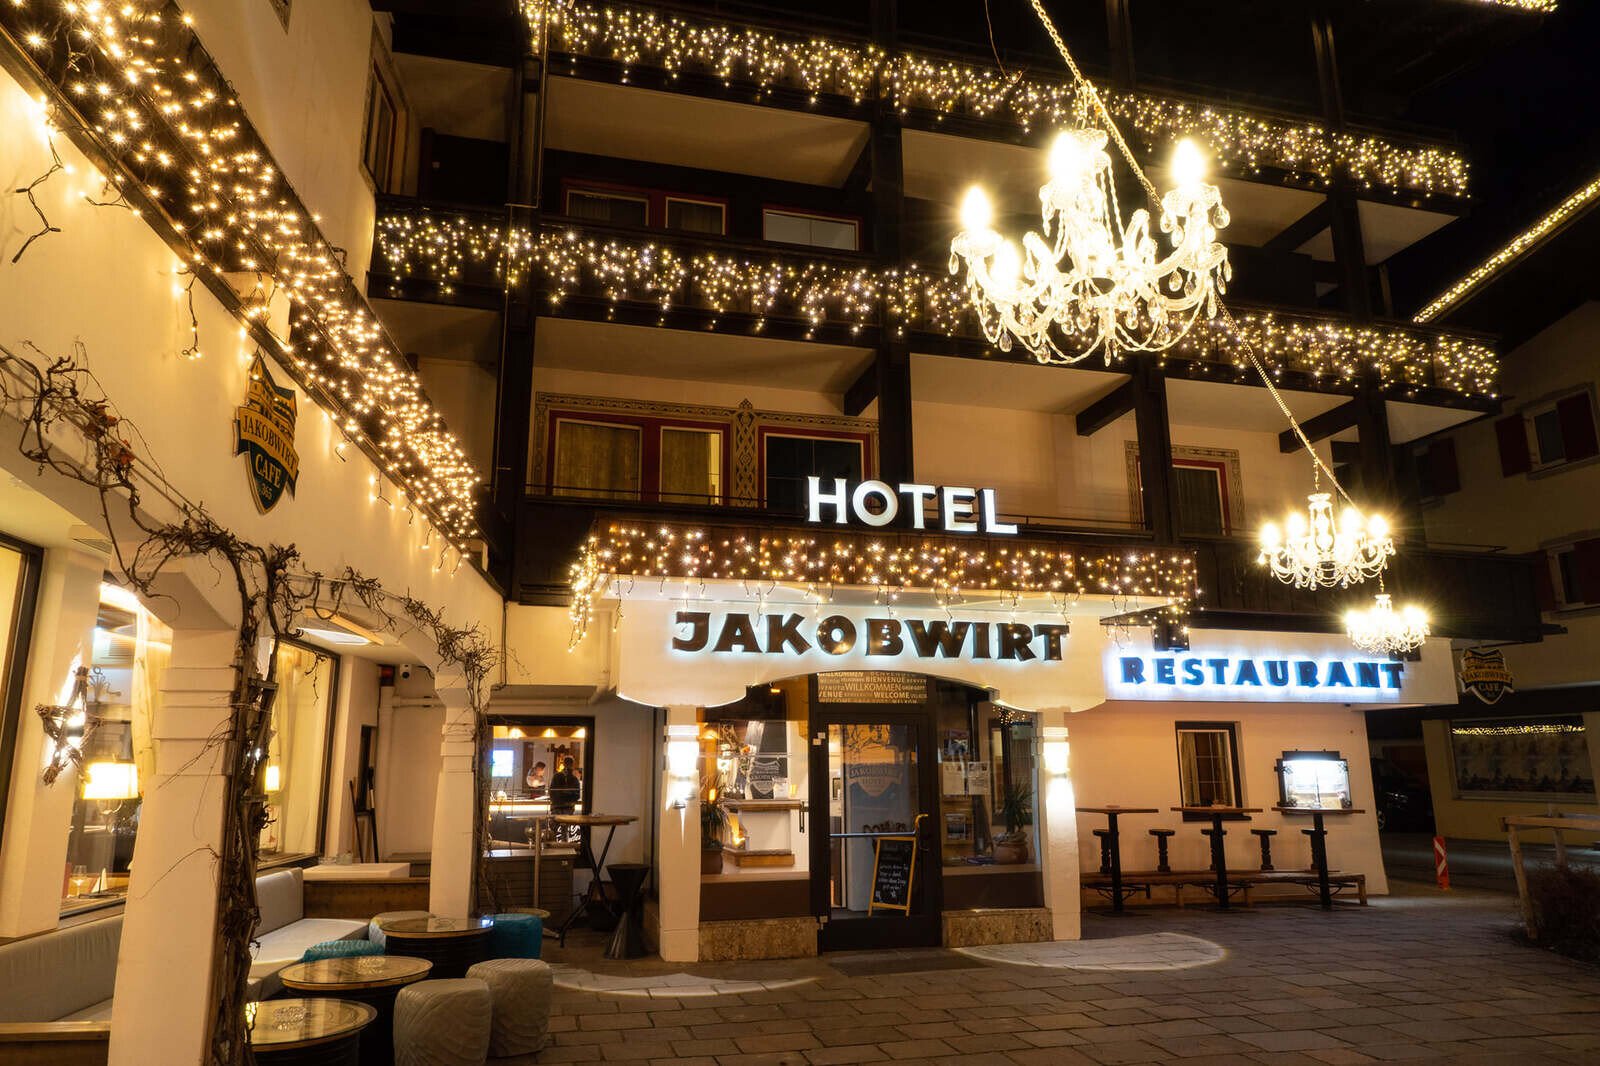 Hotel Jakobwirt exterior